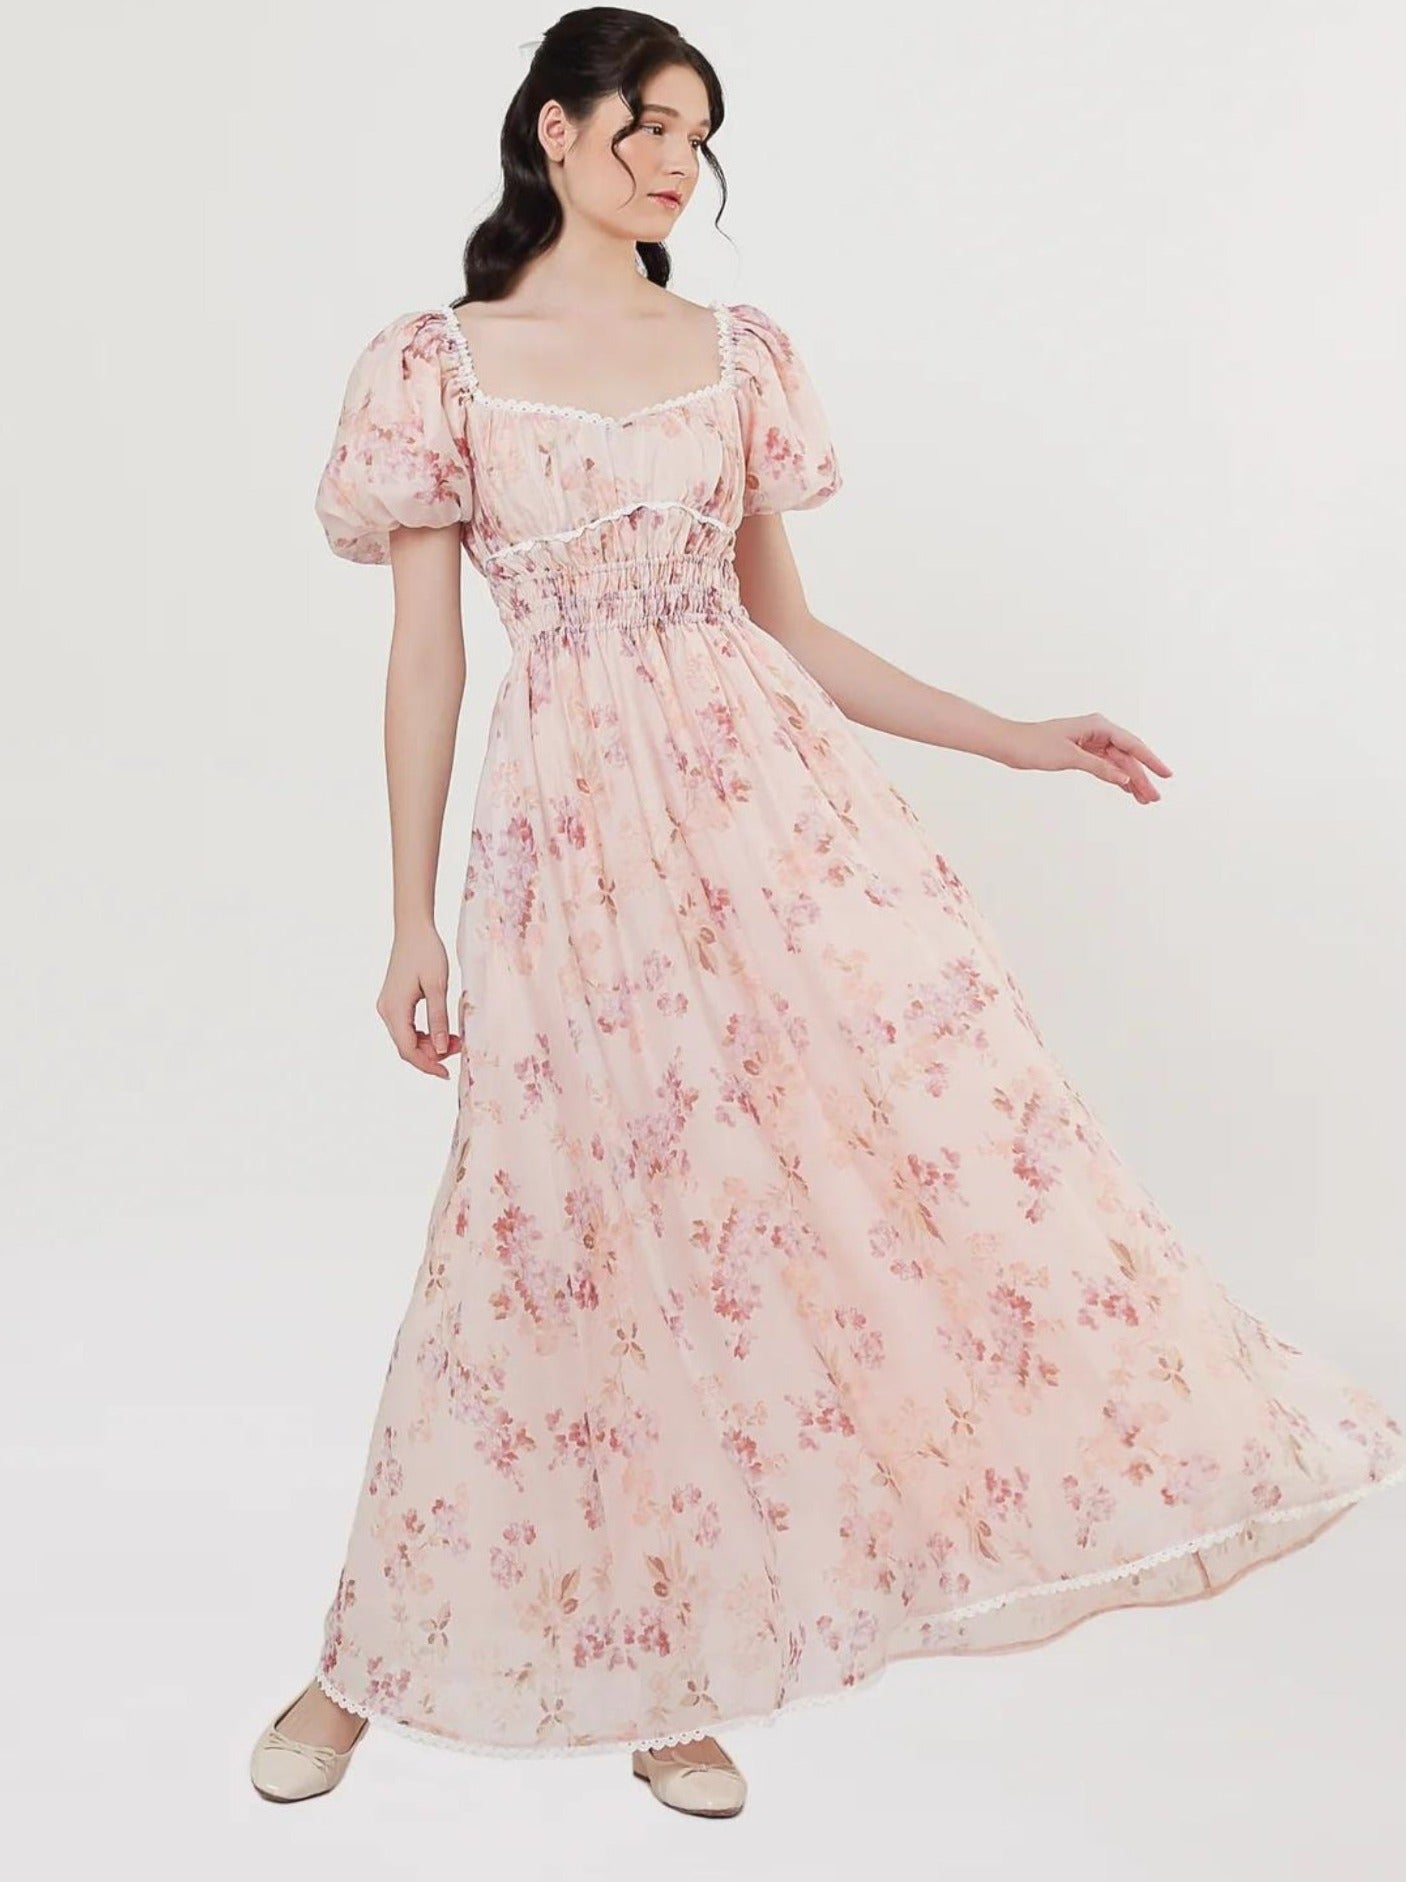 Isabella Dress in Floral Pink